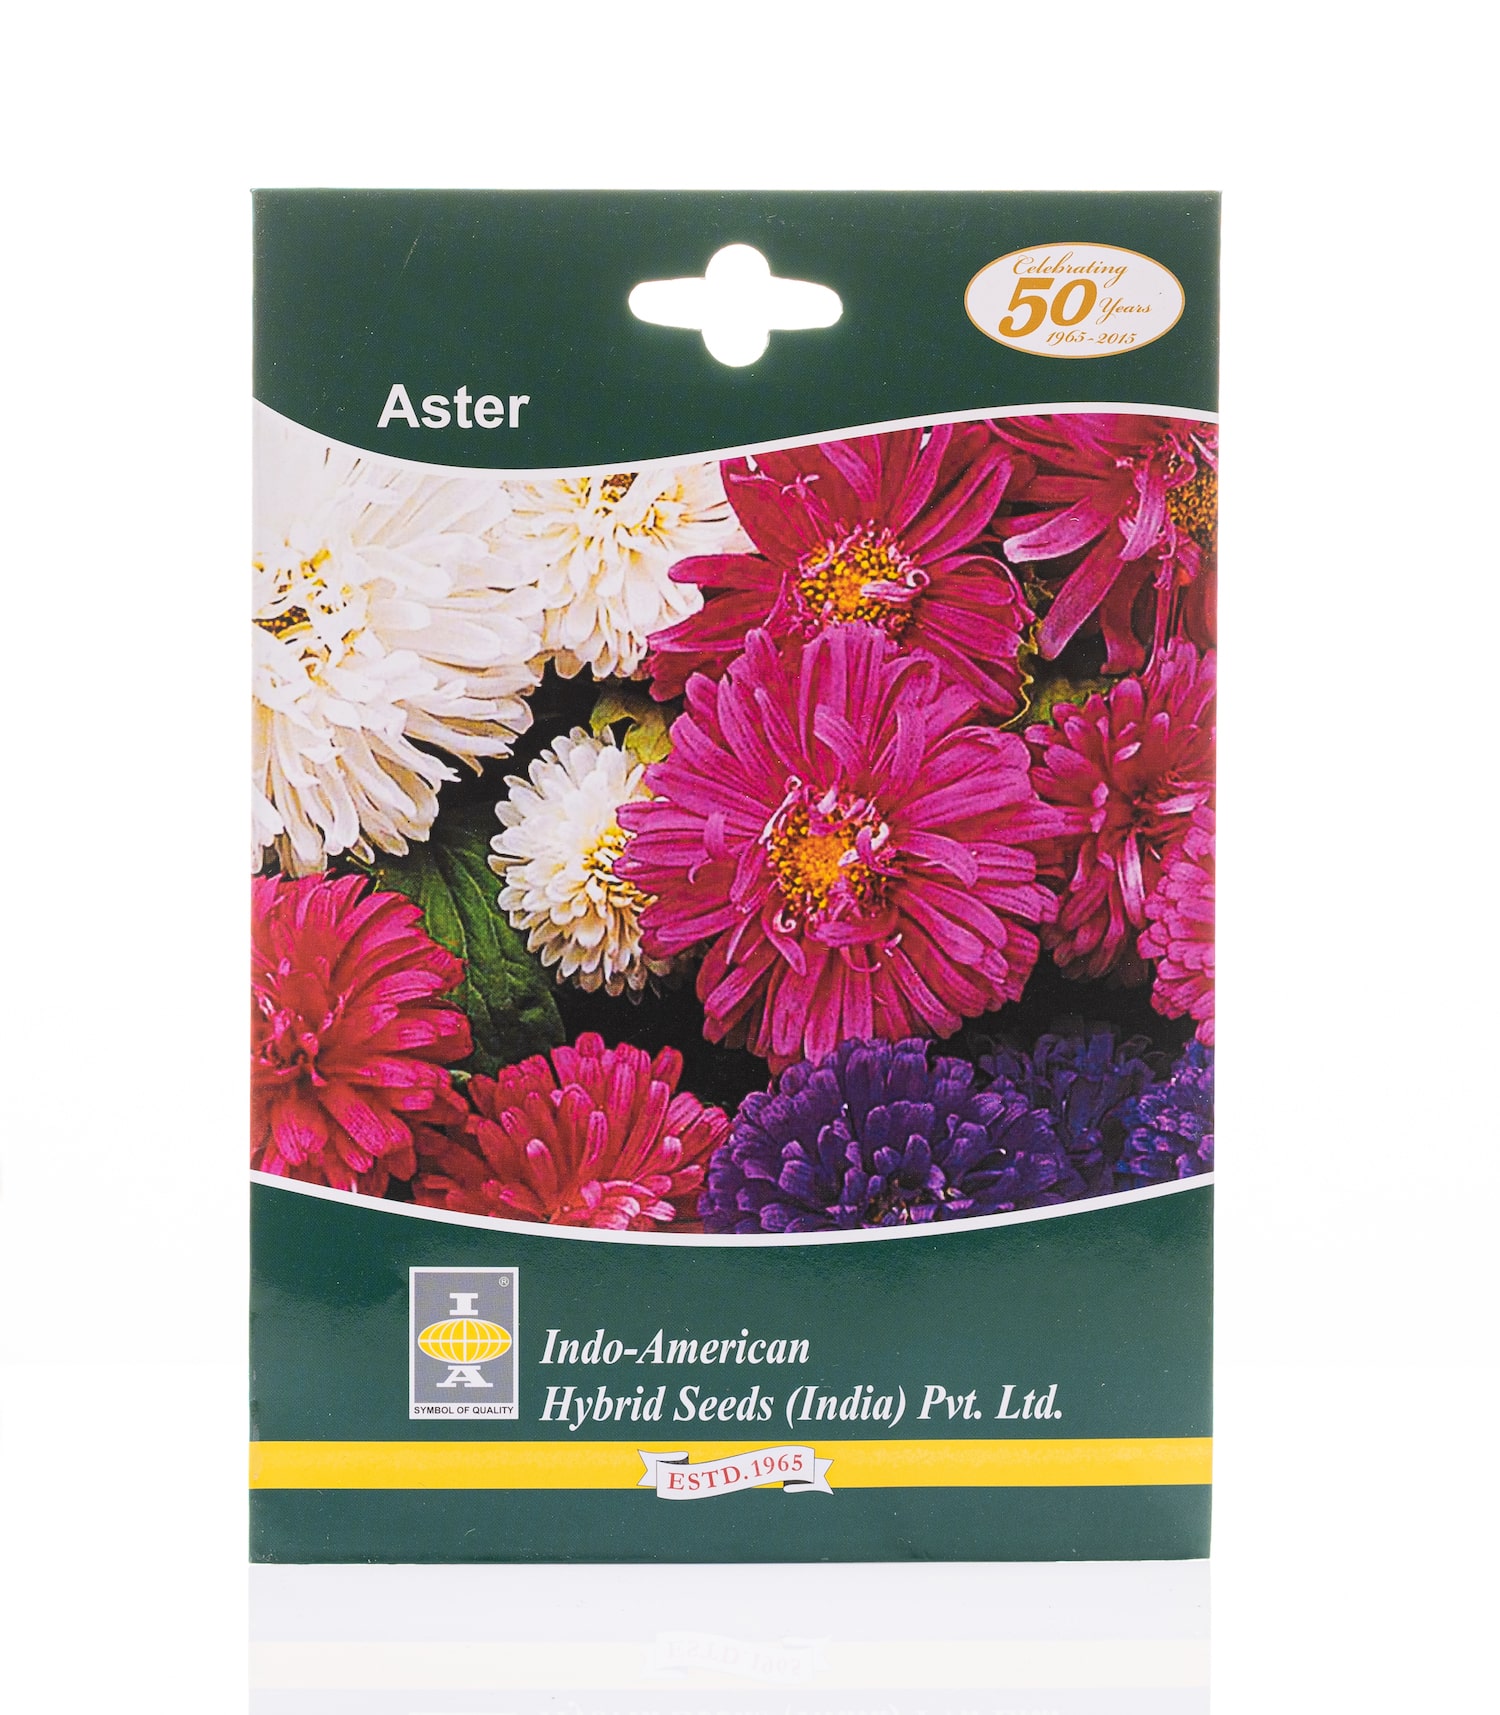 Aster indo american hybrid seeds buy seeds online plant seeds horticult